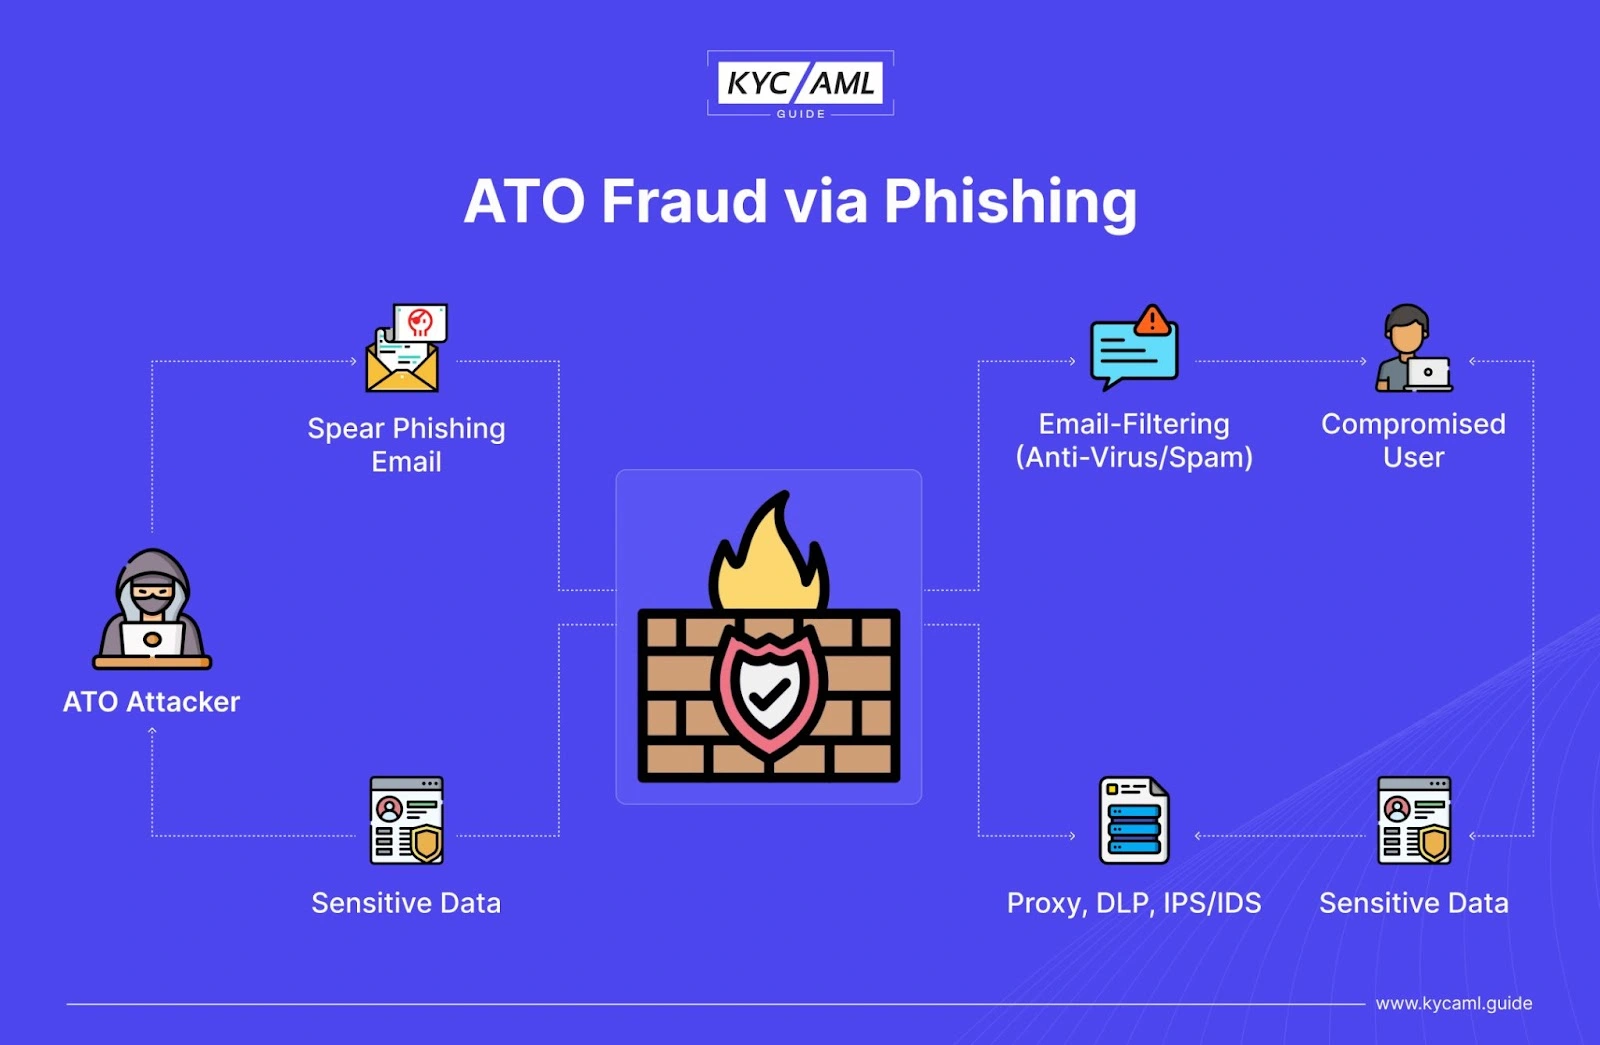 ATO Fraud through Phishing